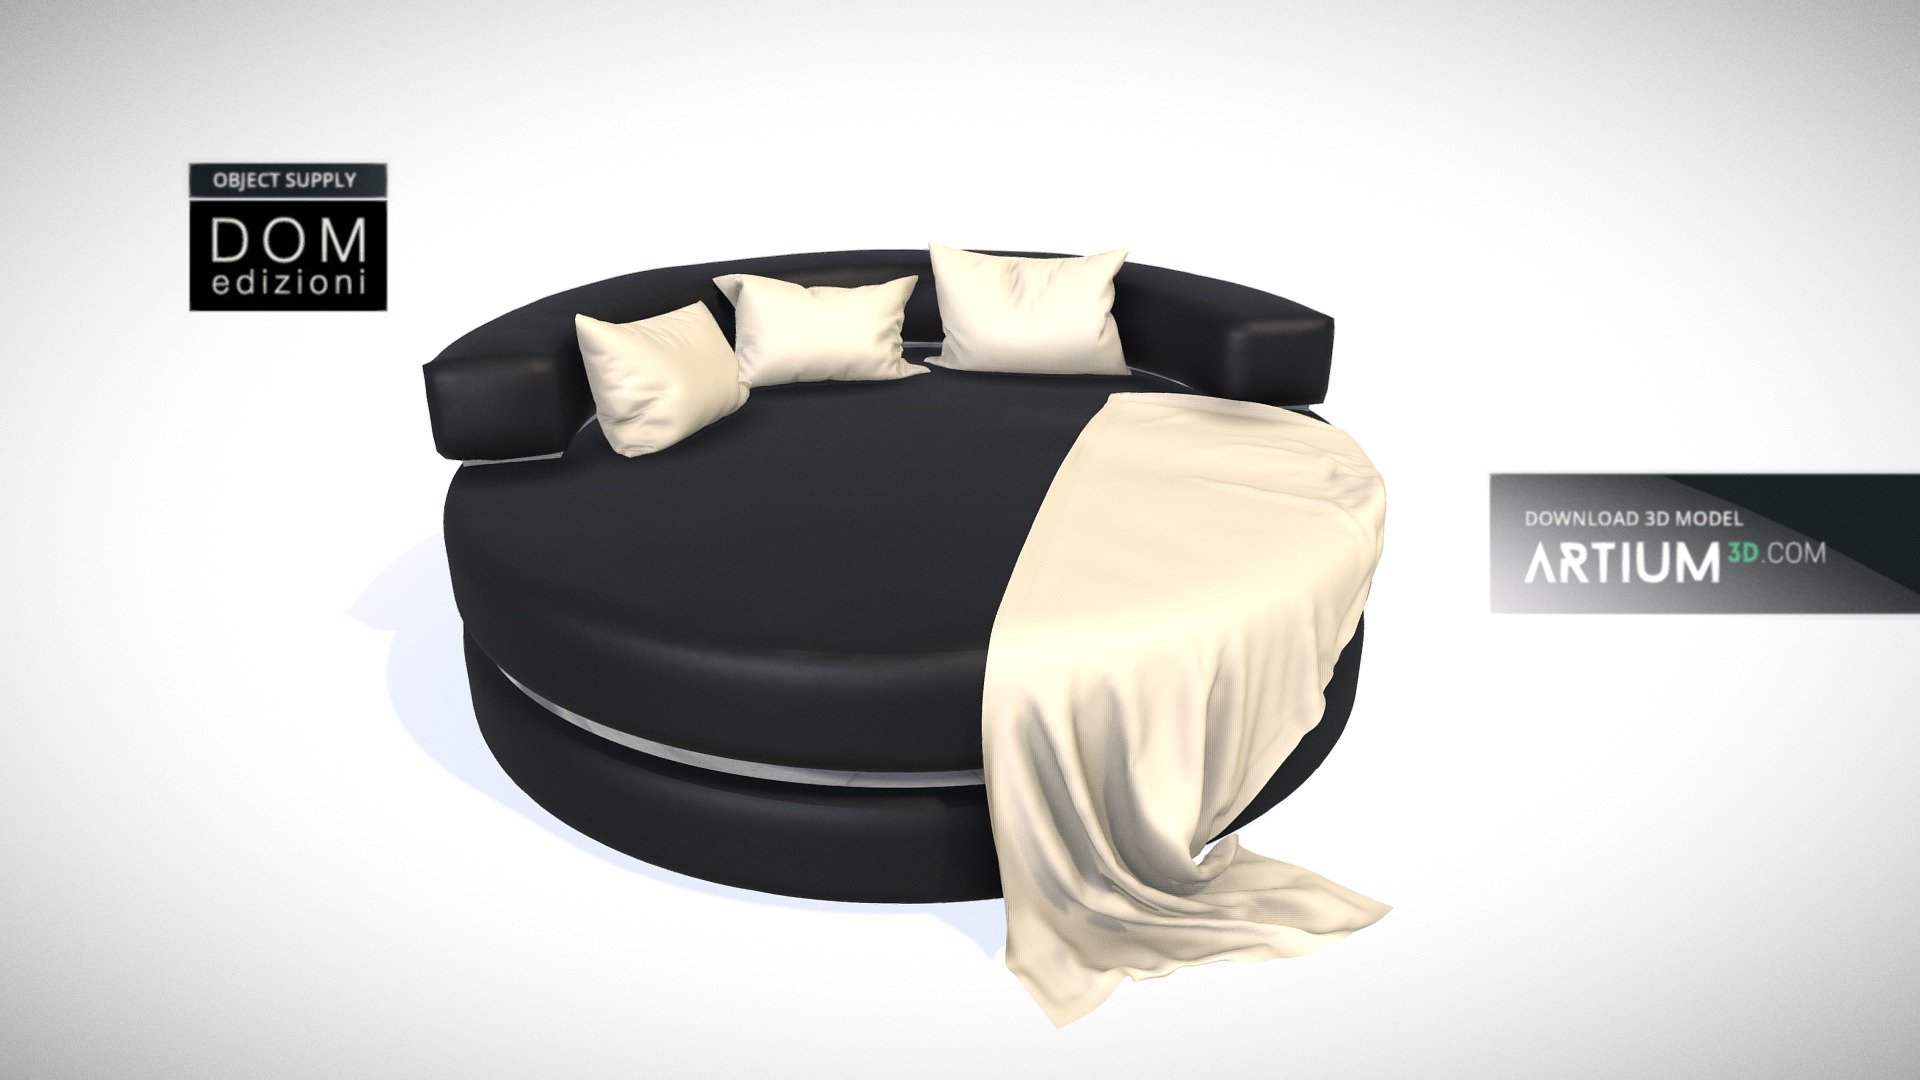 Round chaise Longue Loveseat – Design by Andrea Fogli (Dom Edizioni)
fabric

size: h-56 x d-180 cm

code: PO-002 - Round chaise Longue Loveseat - Dom Edizioni - Buy Royalty Free 3D model by ARTIUM3D 3d model